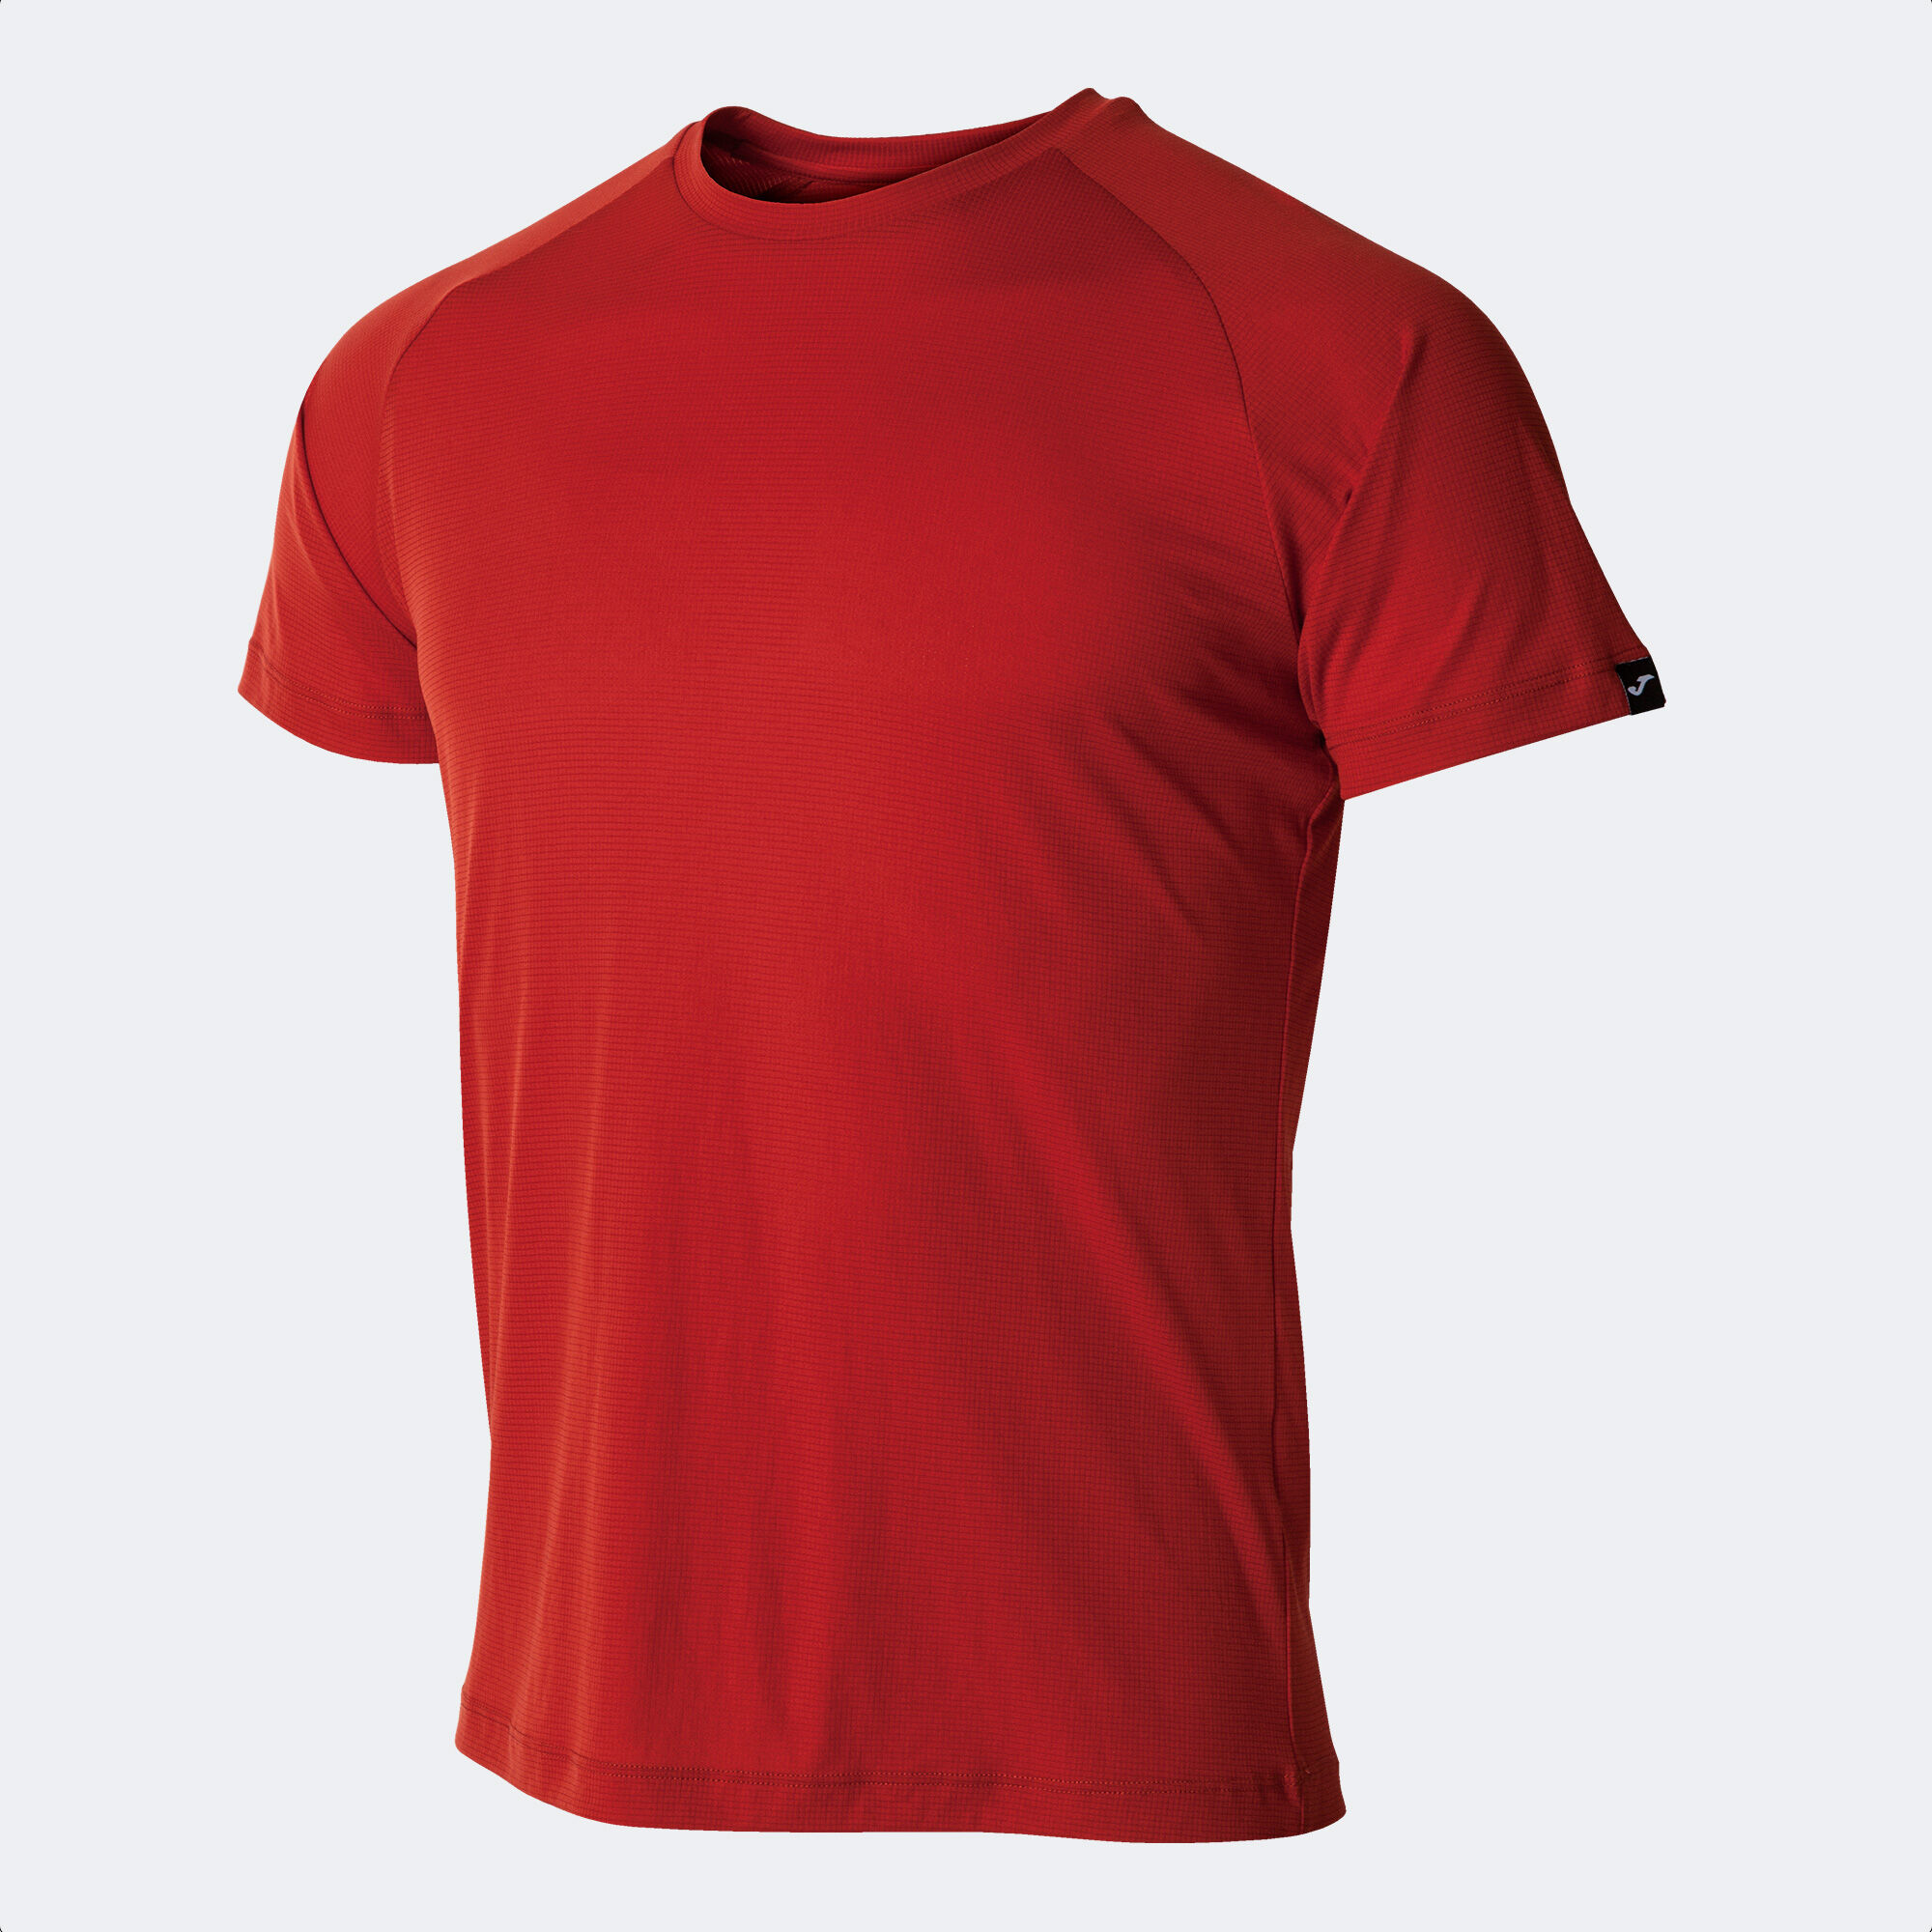 Camiseta manga corta hombre R-Combi rojo